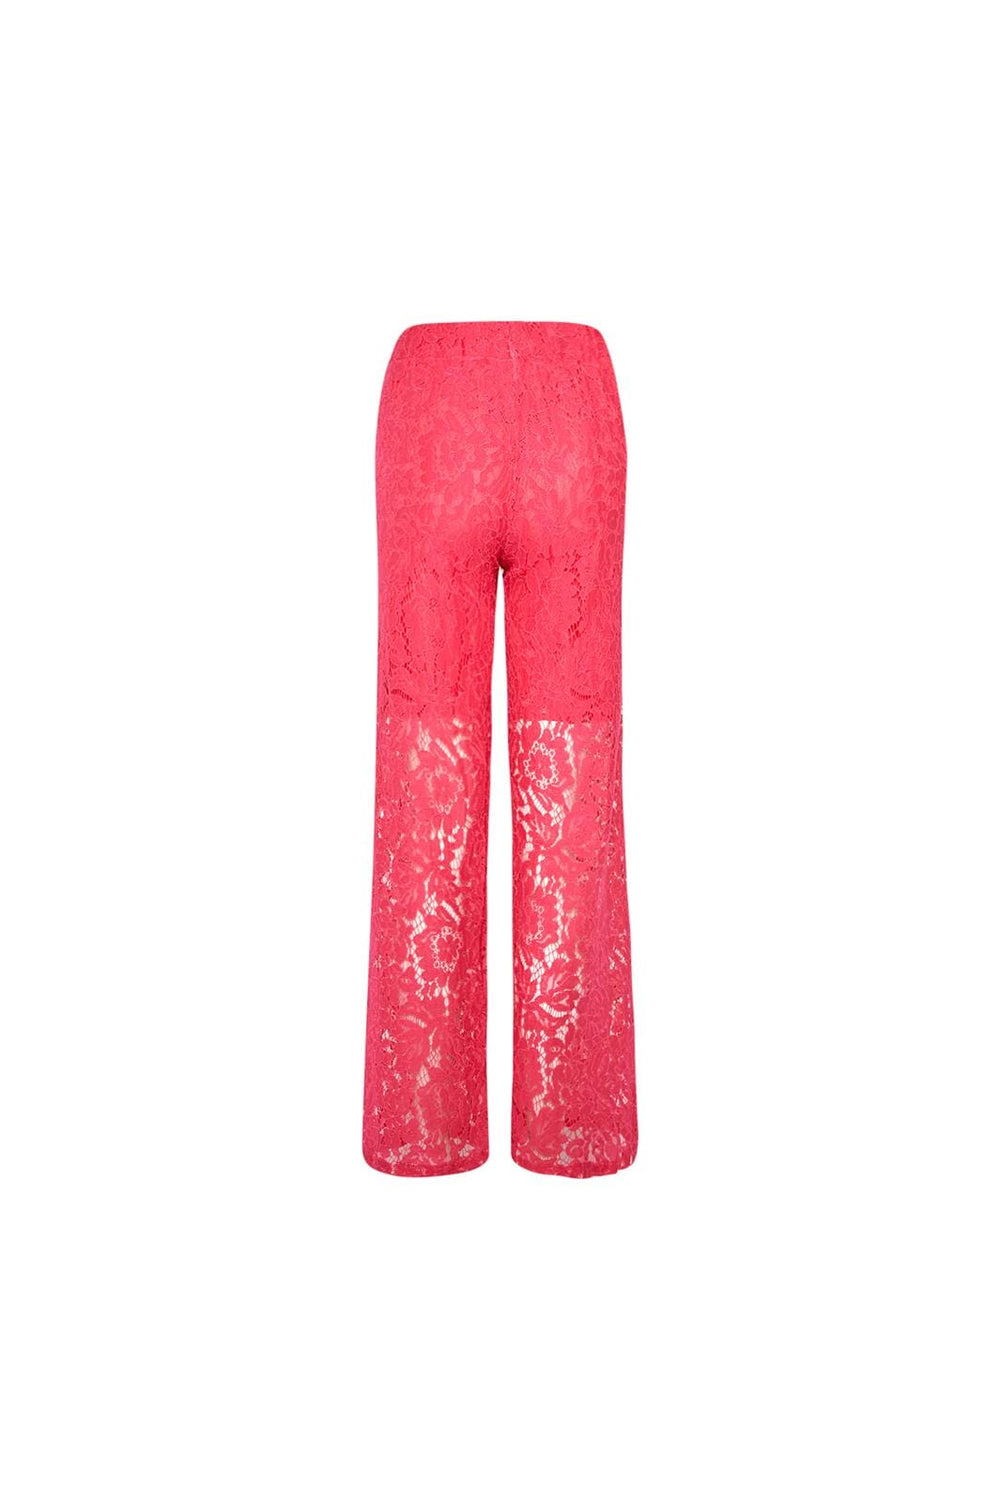 Noella - Briston Pants Ss - 017 Pink